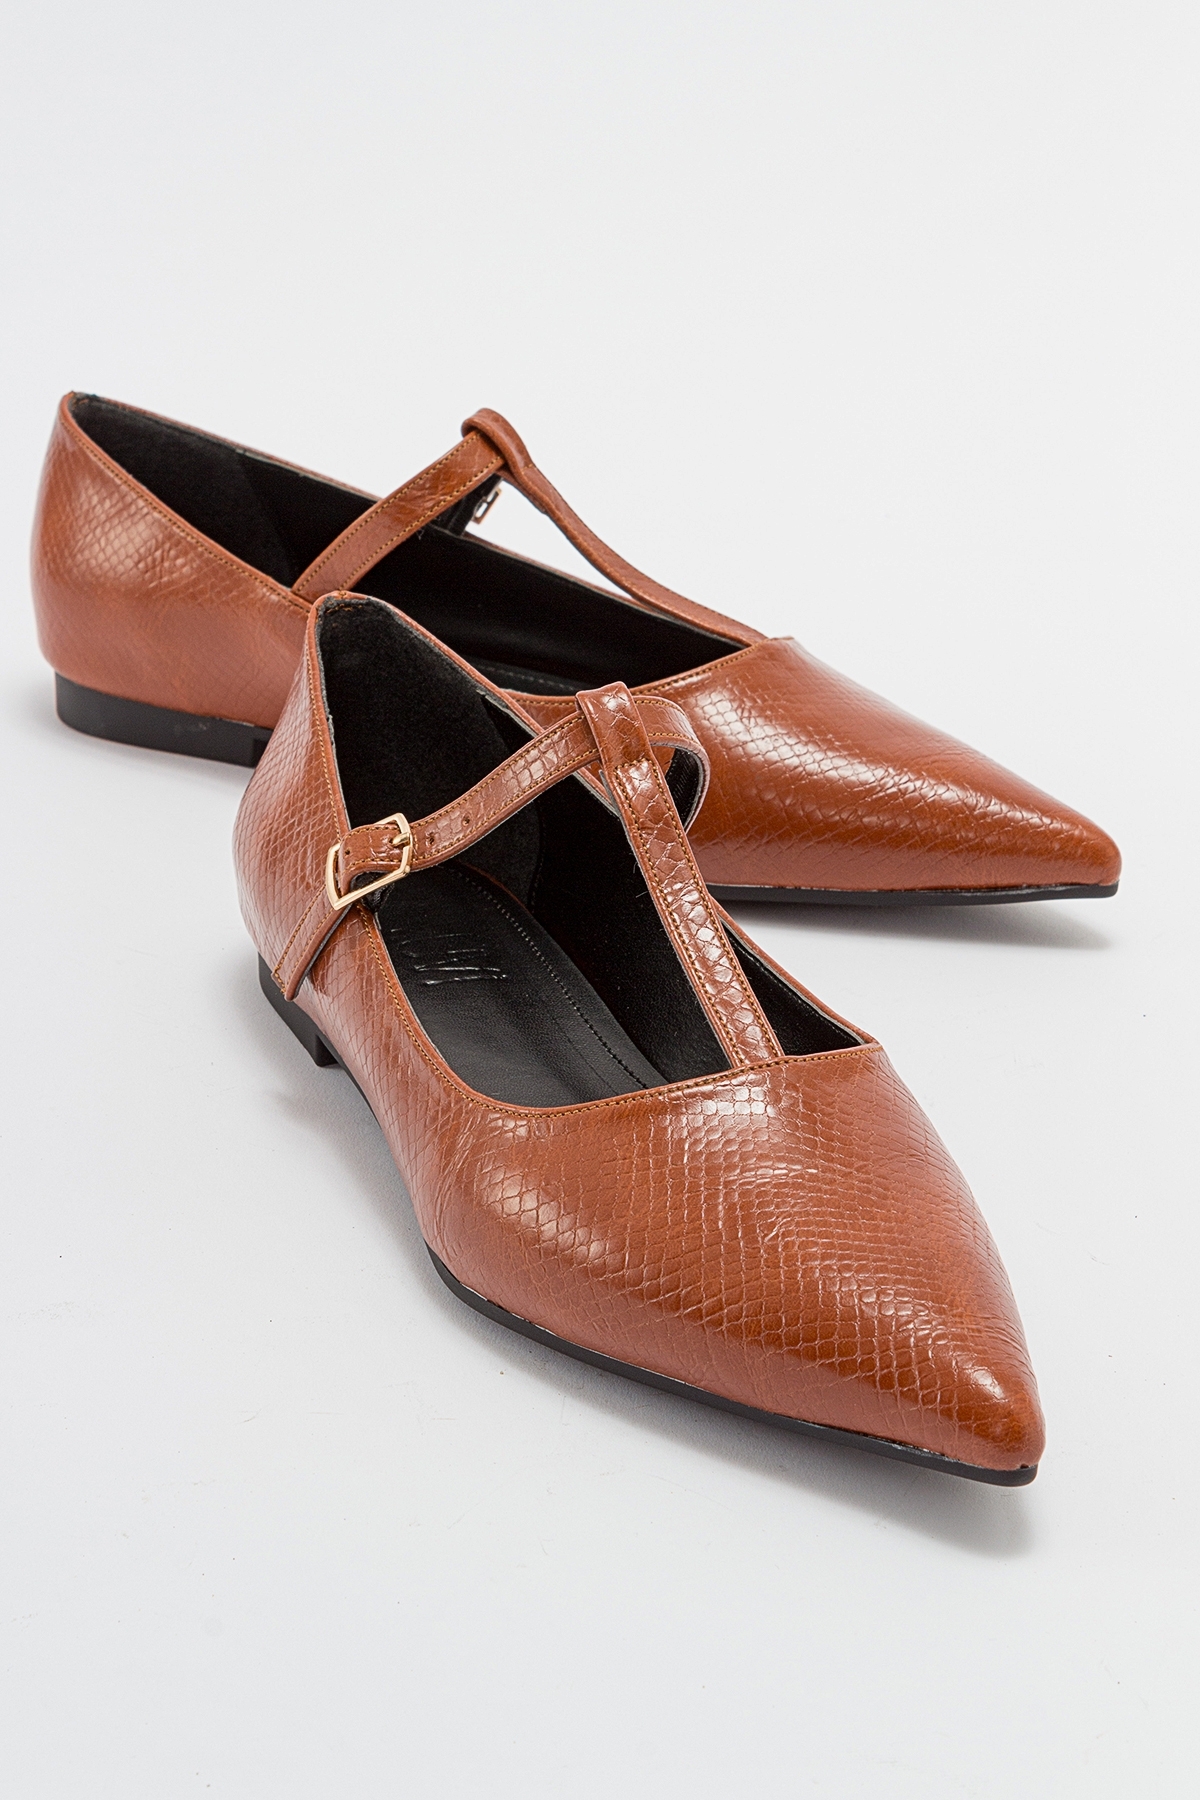 LuviShoes BULVA Women's Tan Patterned Flat Shoes